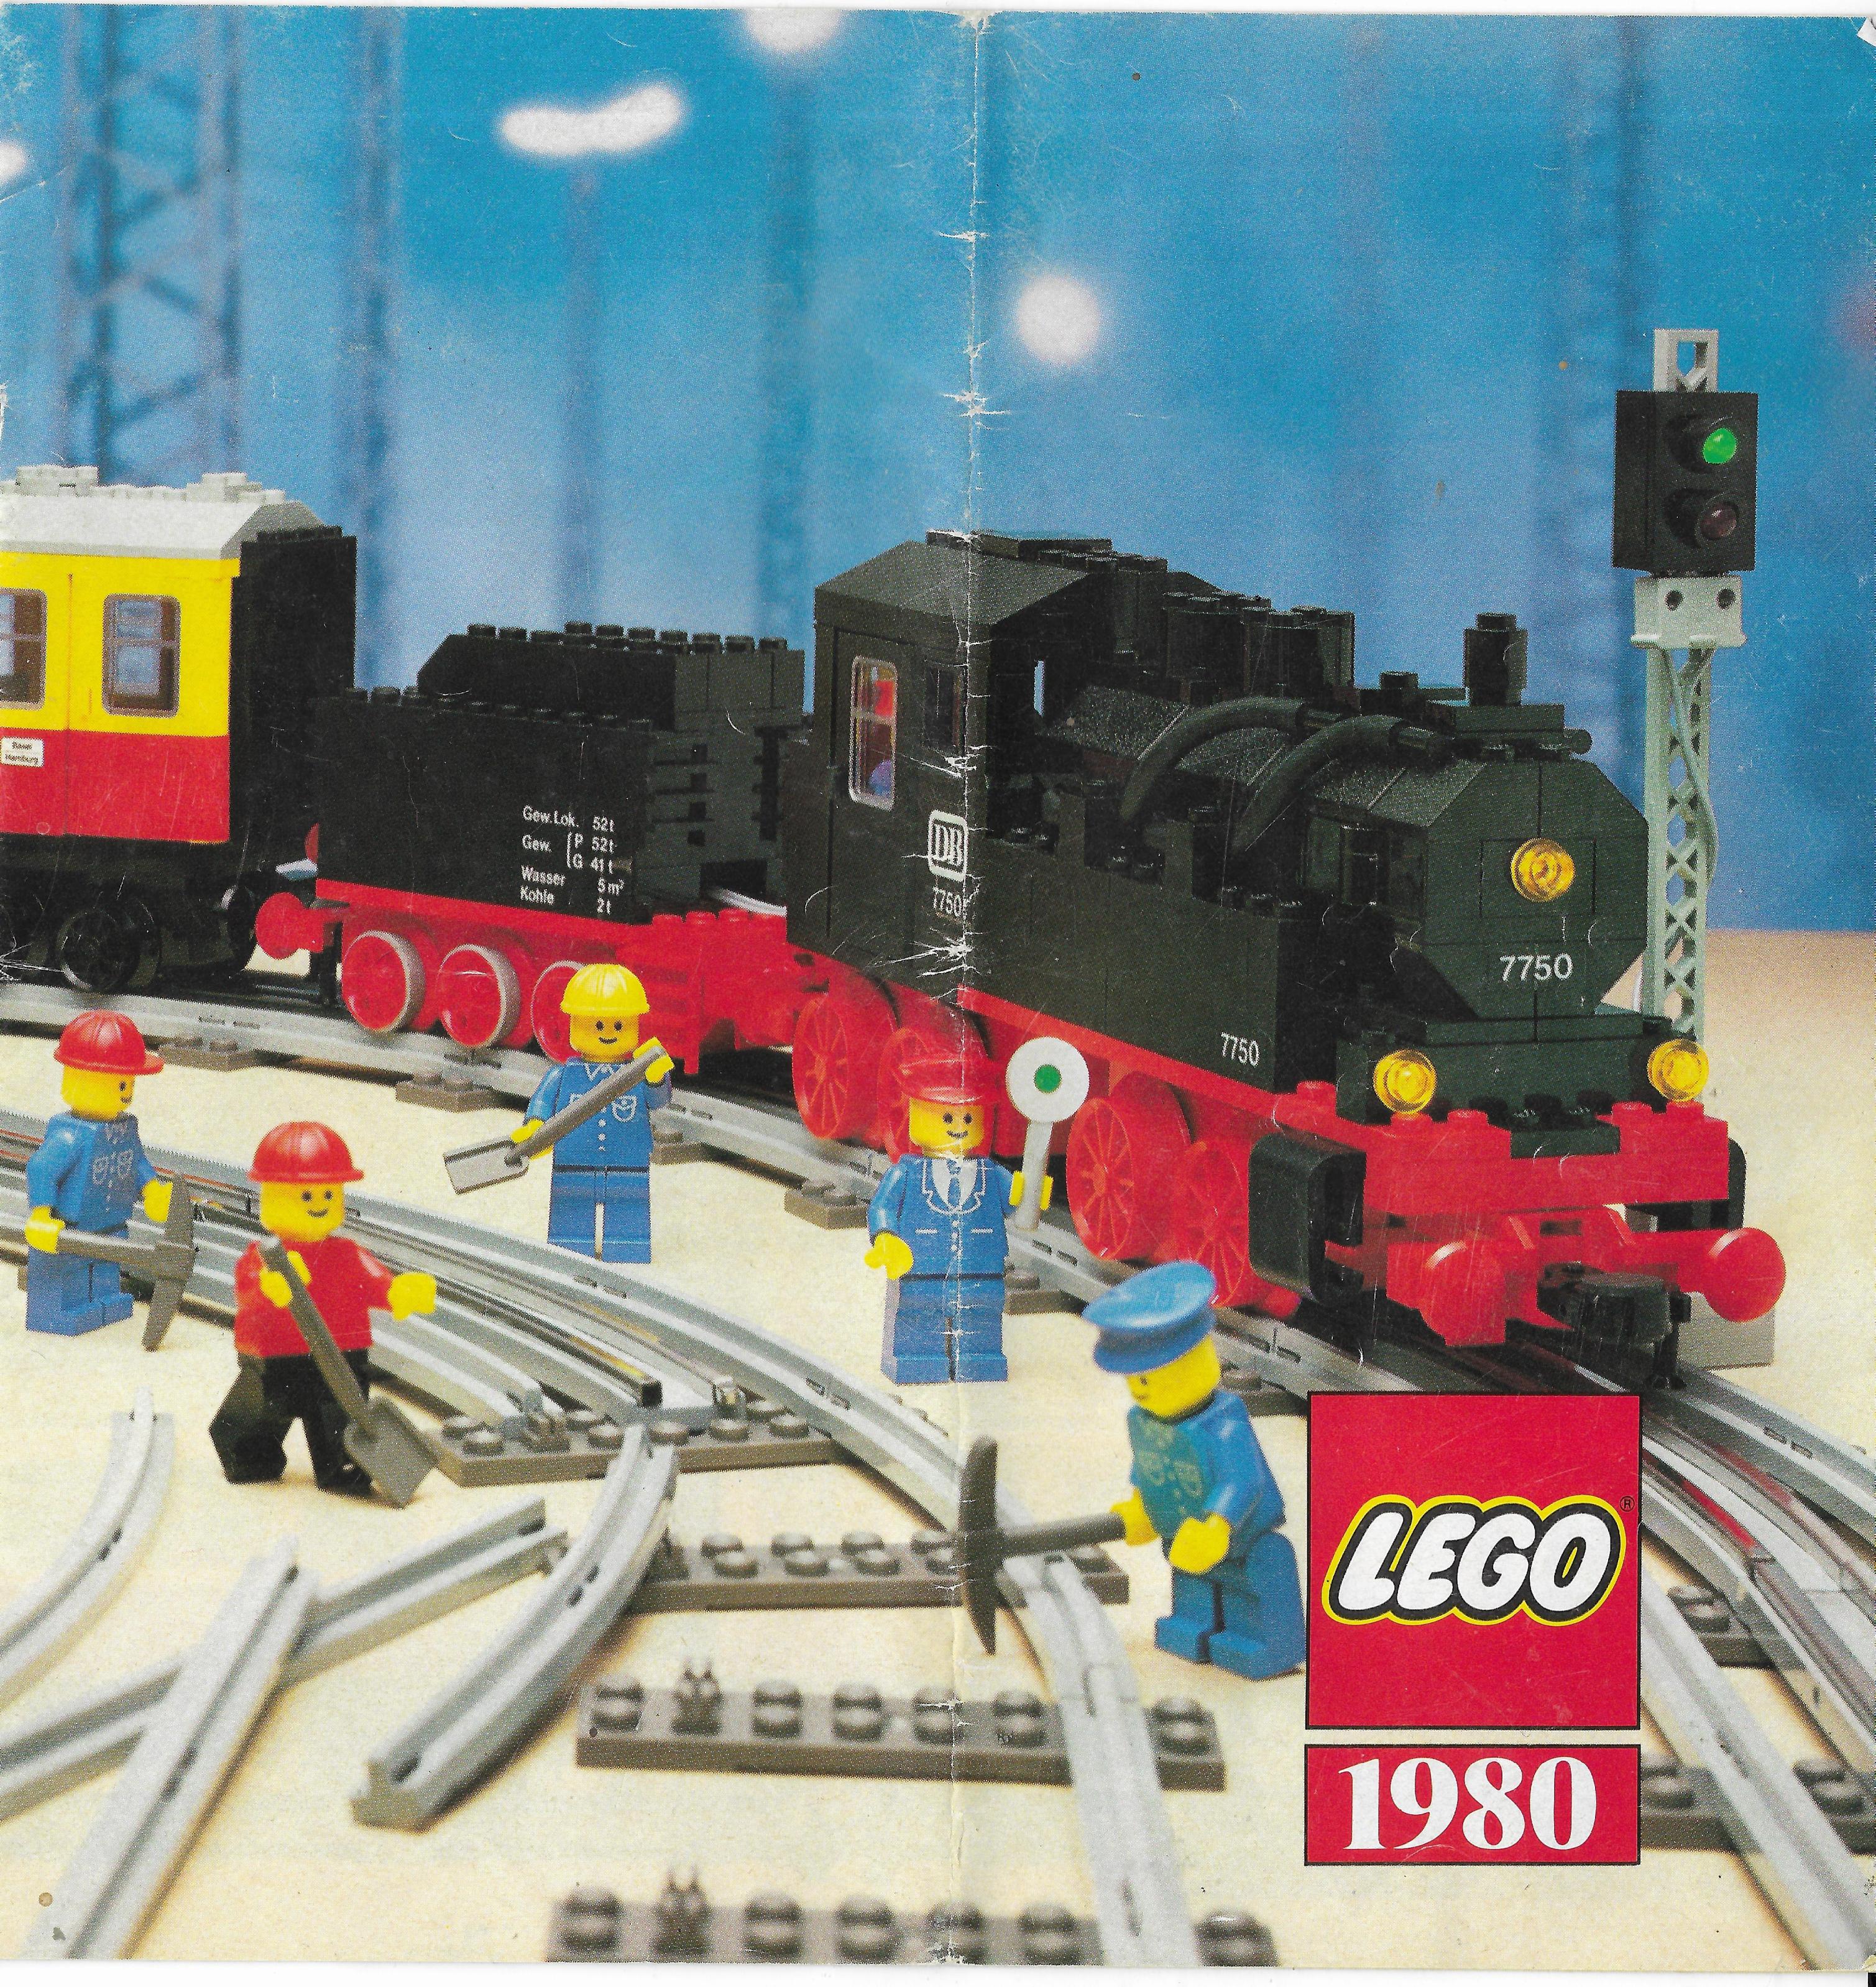 Nyugat-Európai Lego Train katalógus 1980-ból